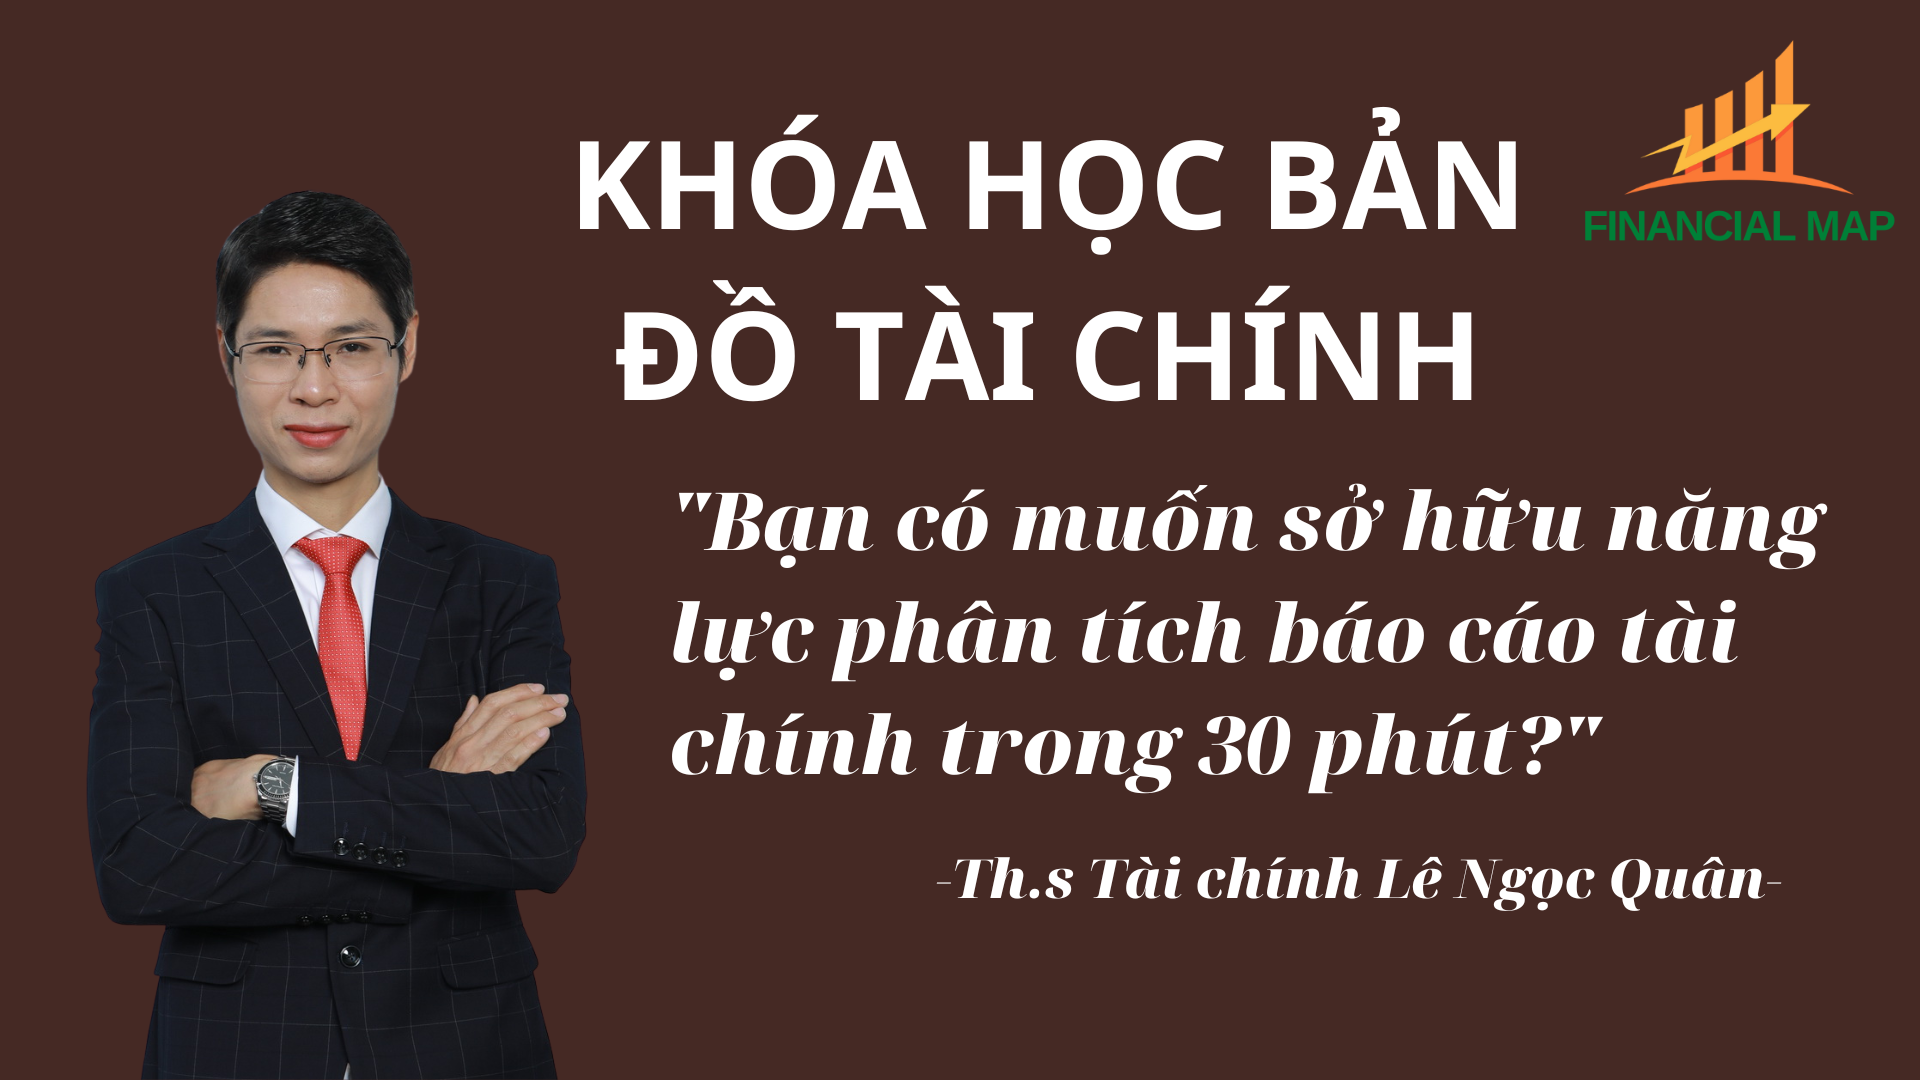 Khoa hoc ban do tai chinh-Khoa hoc tai chinh so 1 Viet Nam